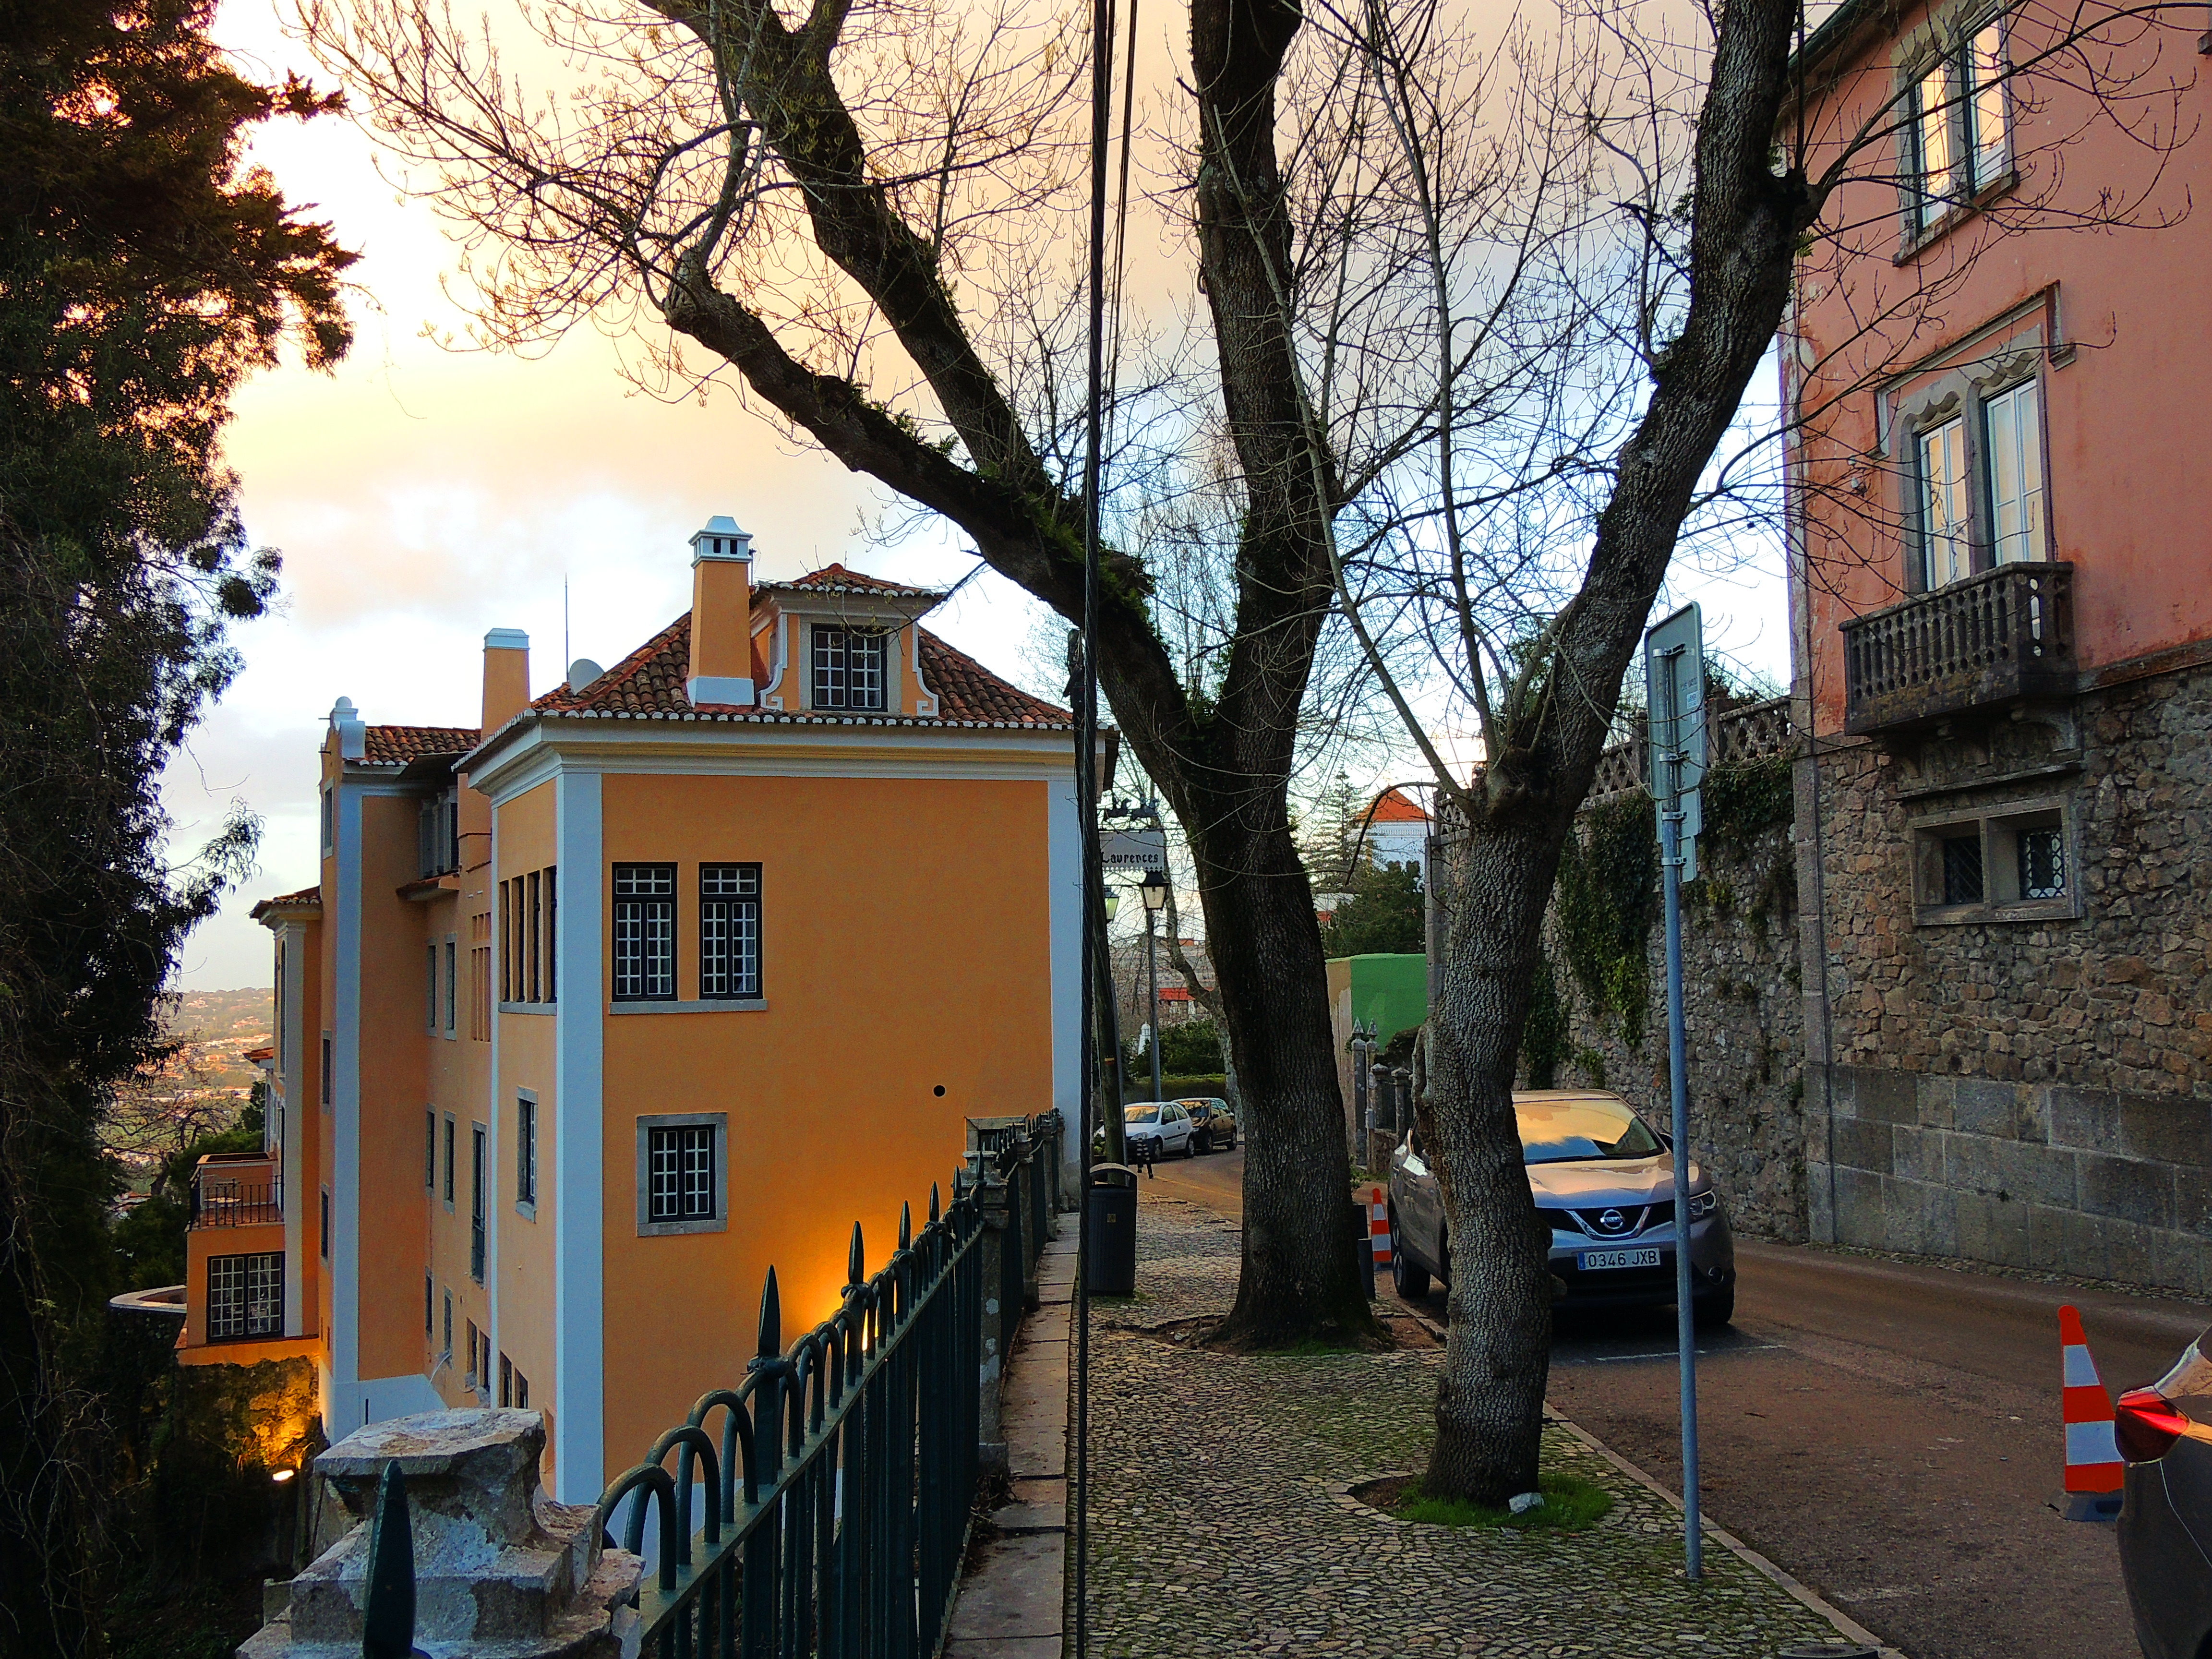 Foto de Sintra (Lisbon), Portugal